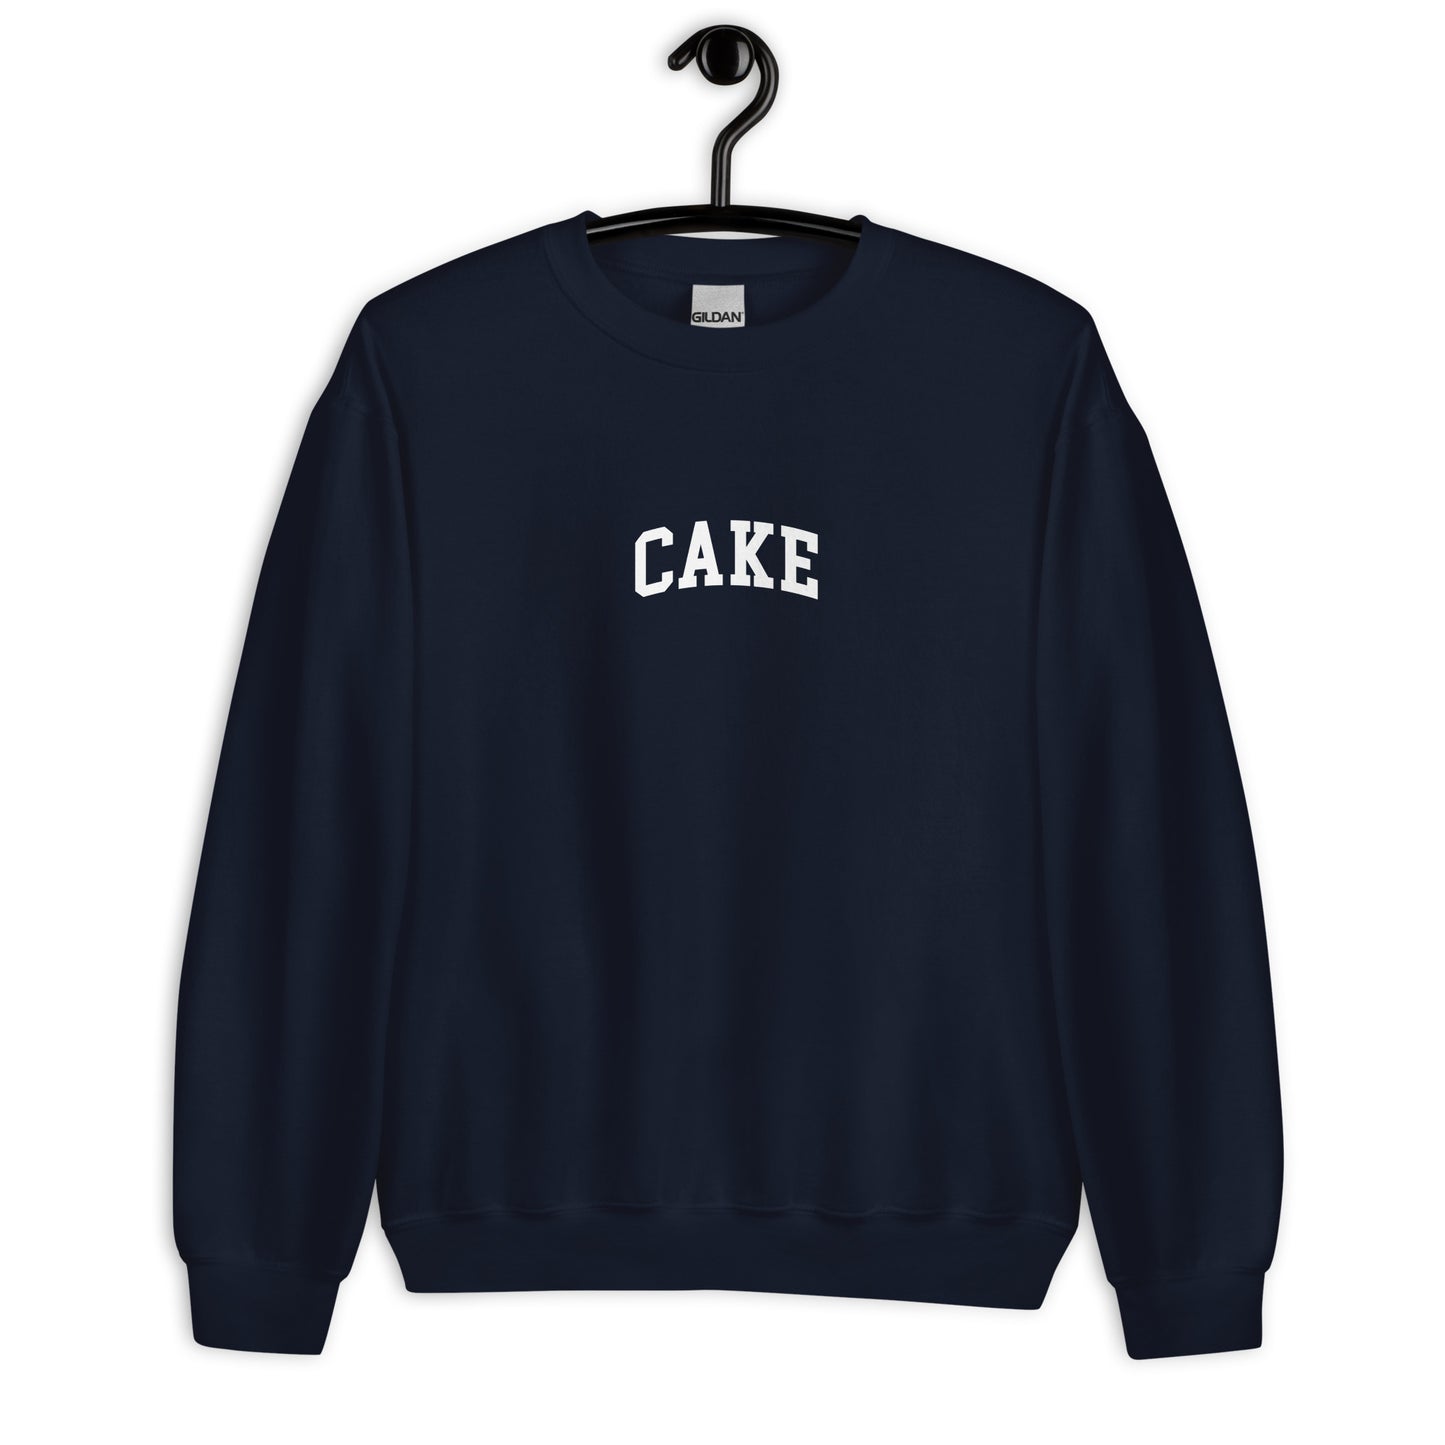 Cake Sweatshirt - Arched Font